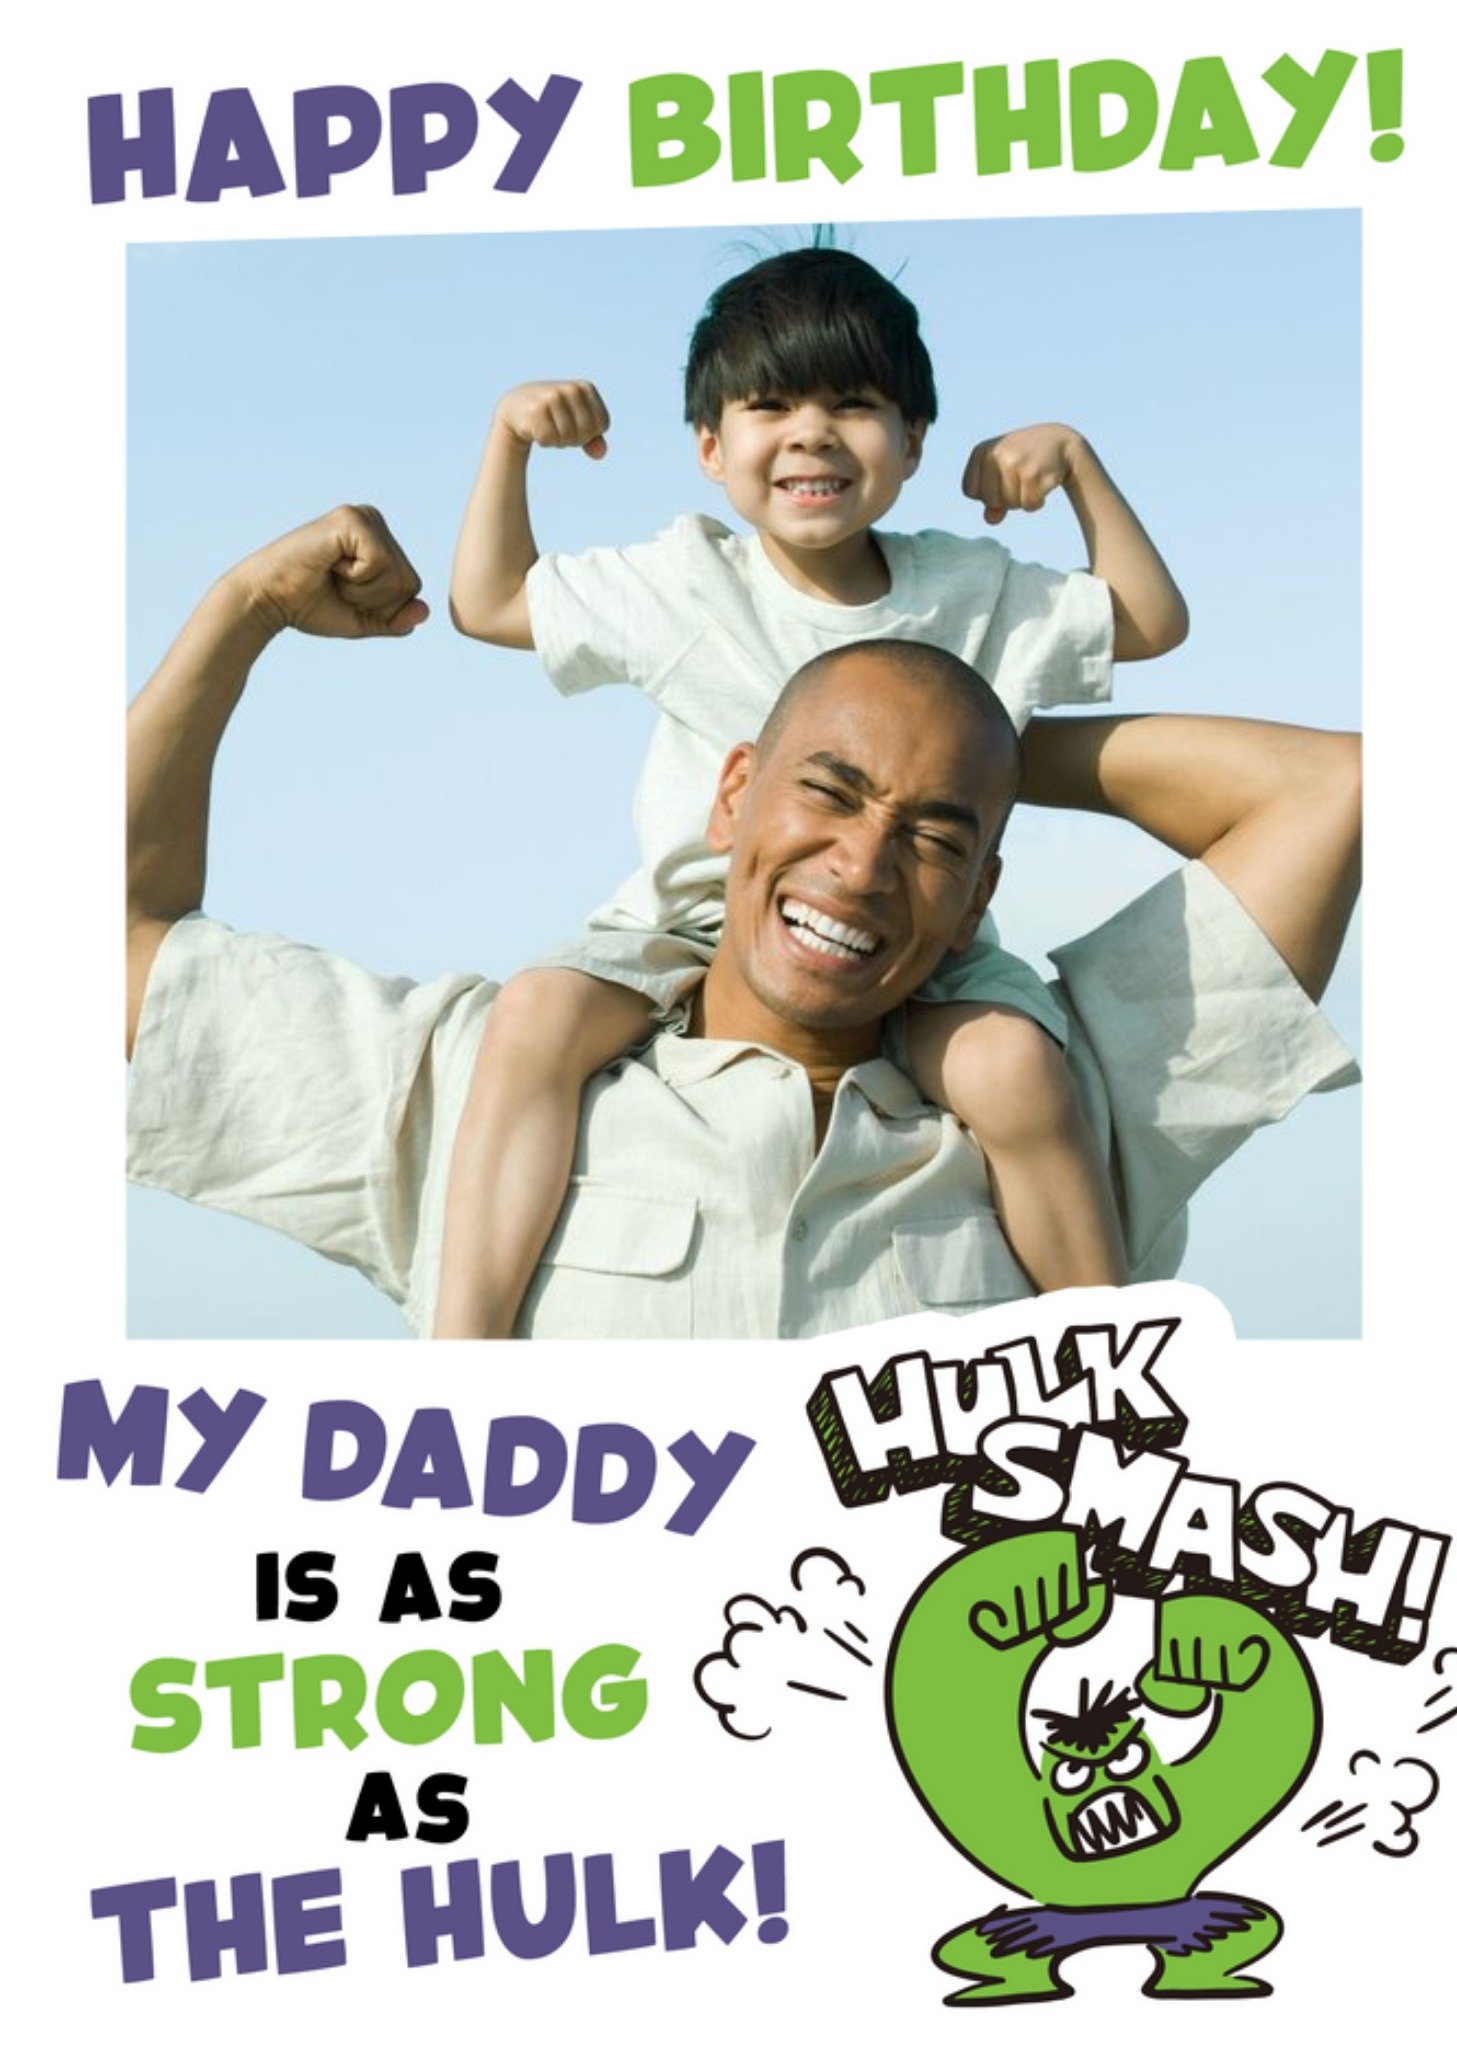 Disney Hulk Smash - Birthday Card For Dad - Photo Upload Ecard